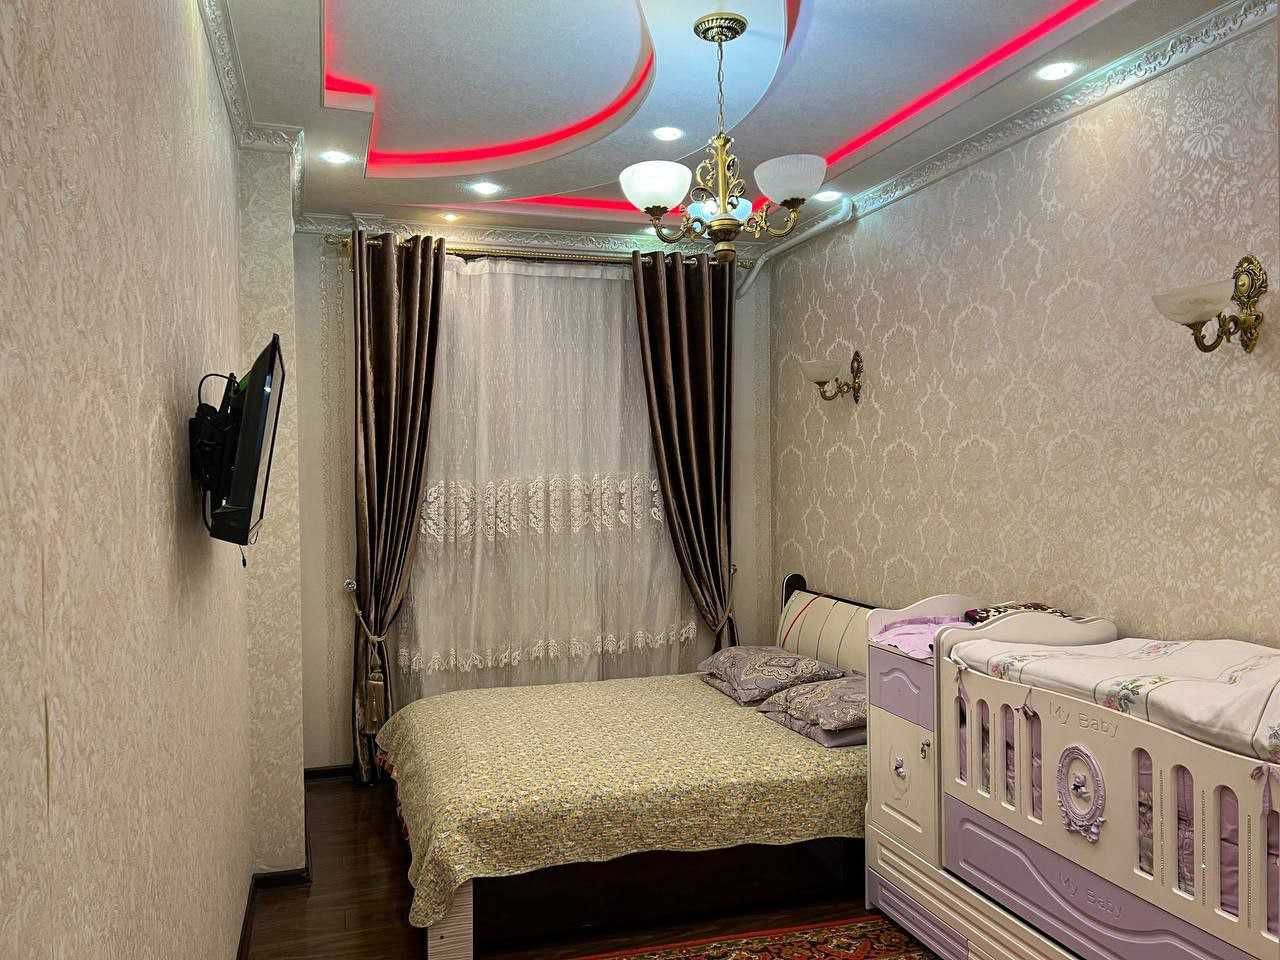 Продается 3-х комнатная квартира в Юнусабаде (RM)